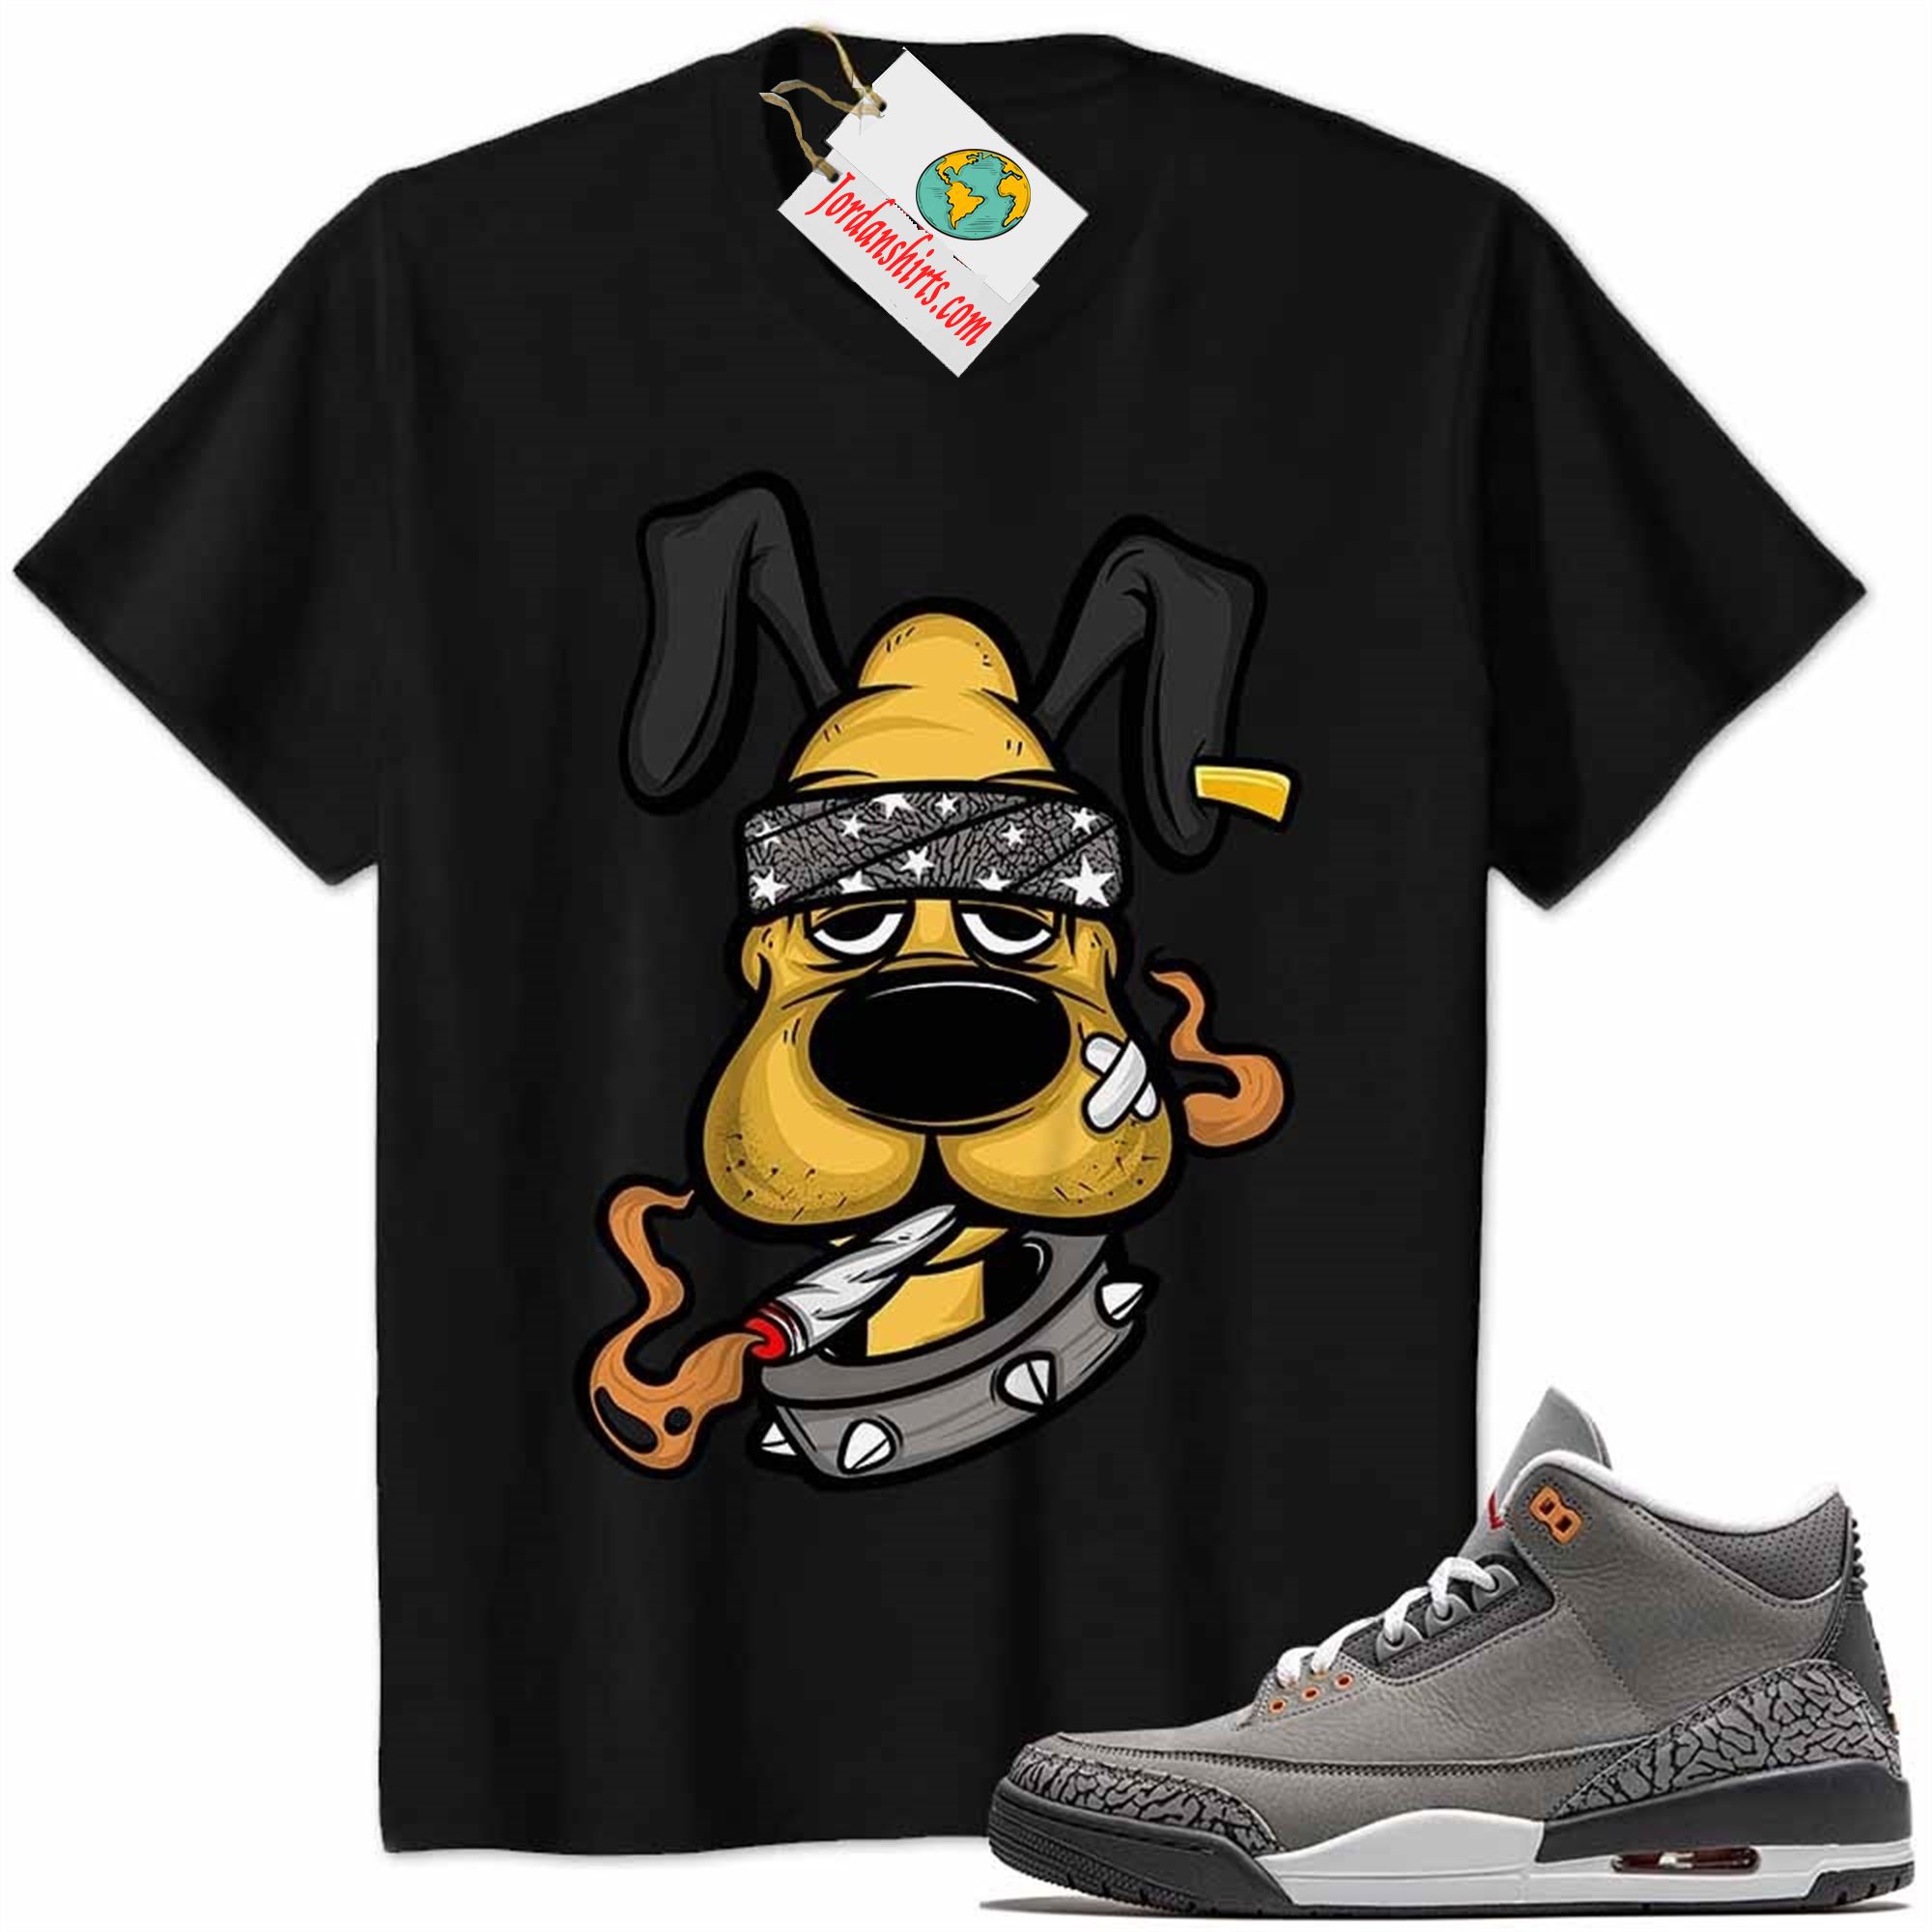 Jordan 3 Shirt, Gangster Pluto Smoke Weed Black Air Jordan 3 Cool Grey 3s Size Up To 5xl